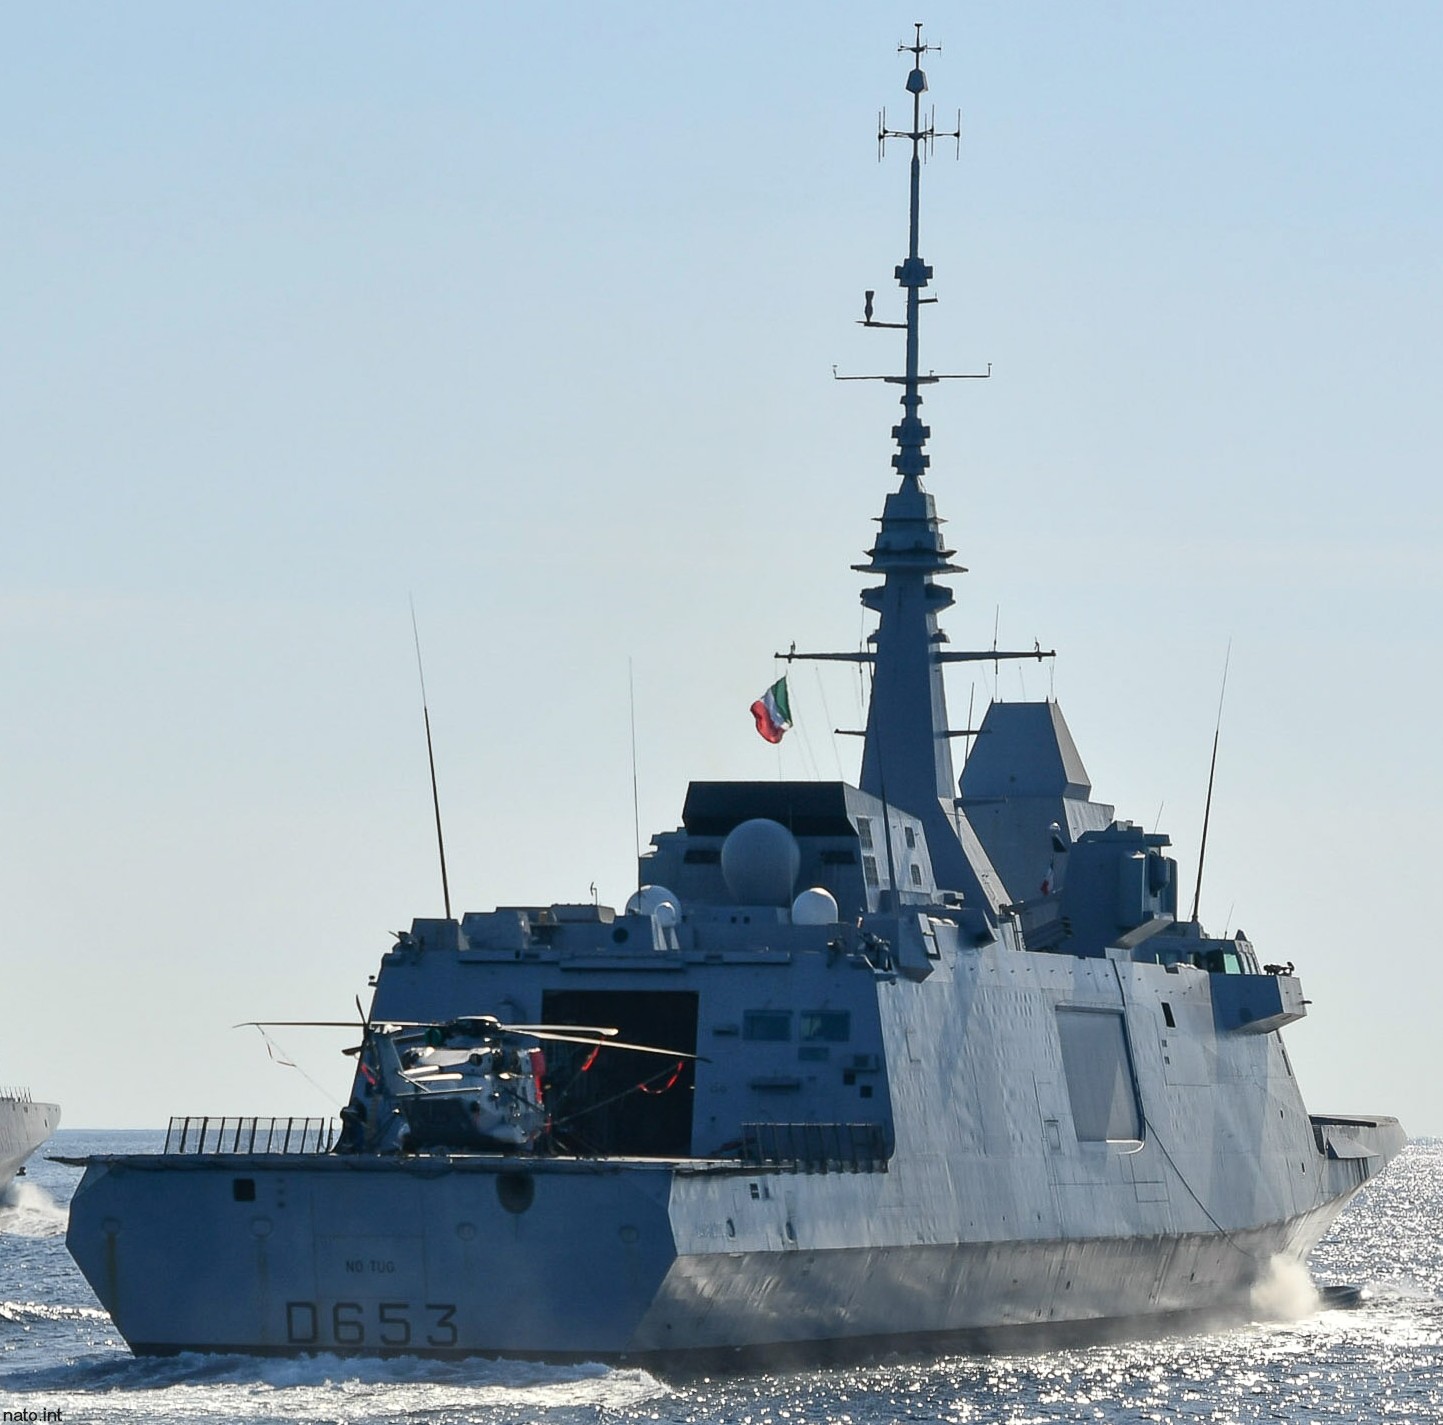 d-653 fs languedoc fremm aquitaine class frigate fregate multi purpose french navy marine nationale 18